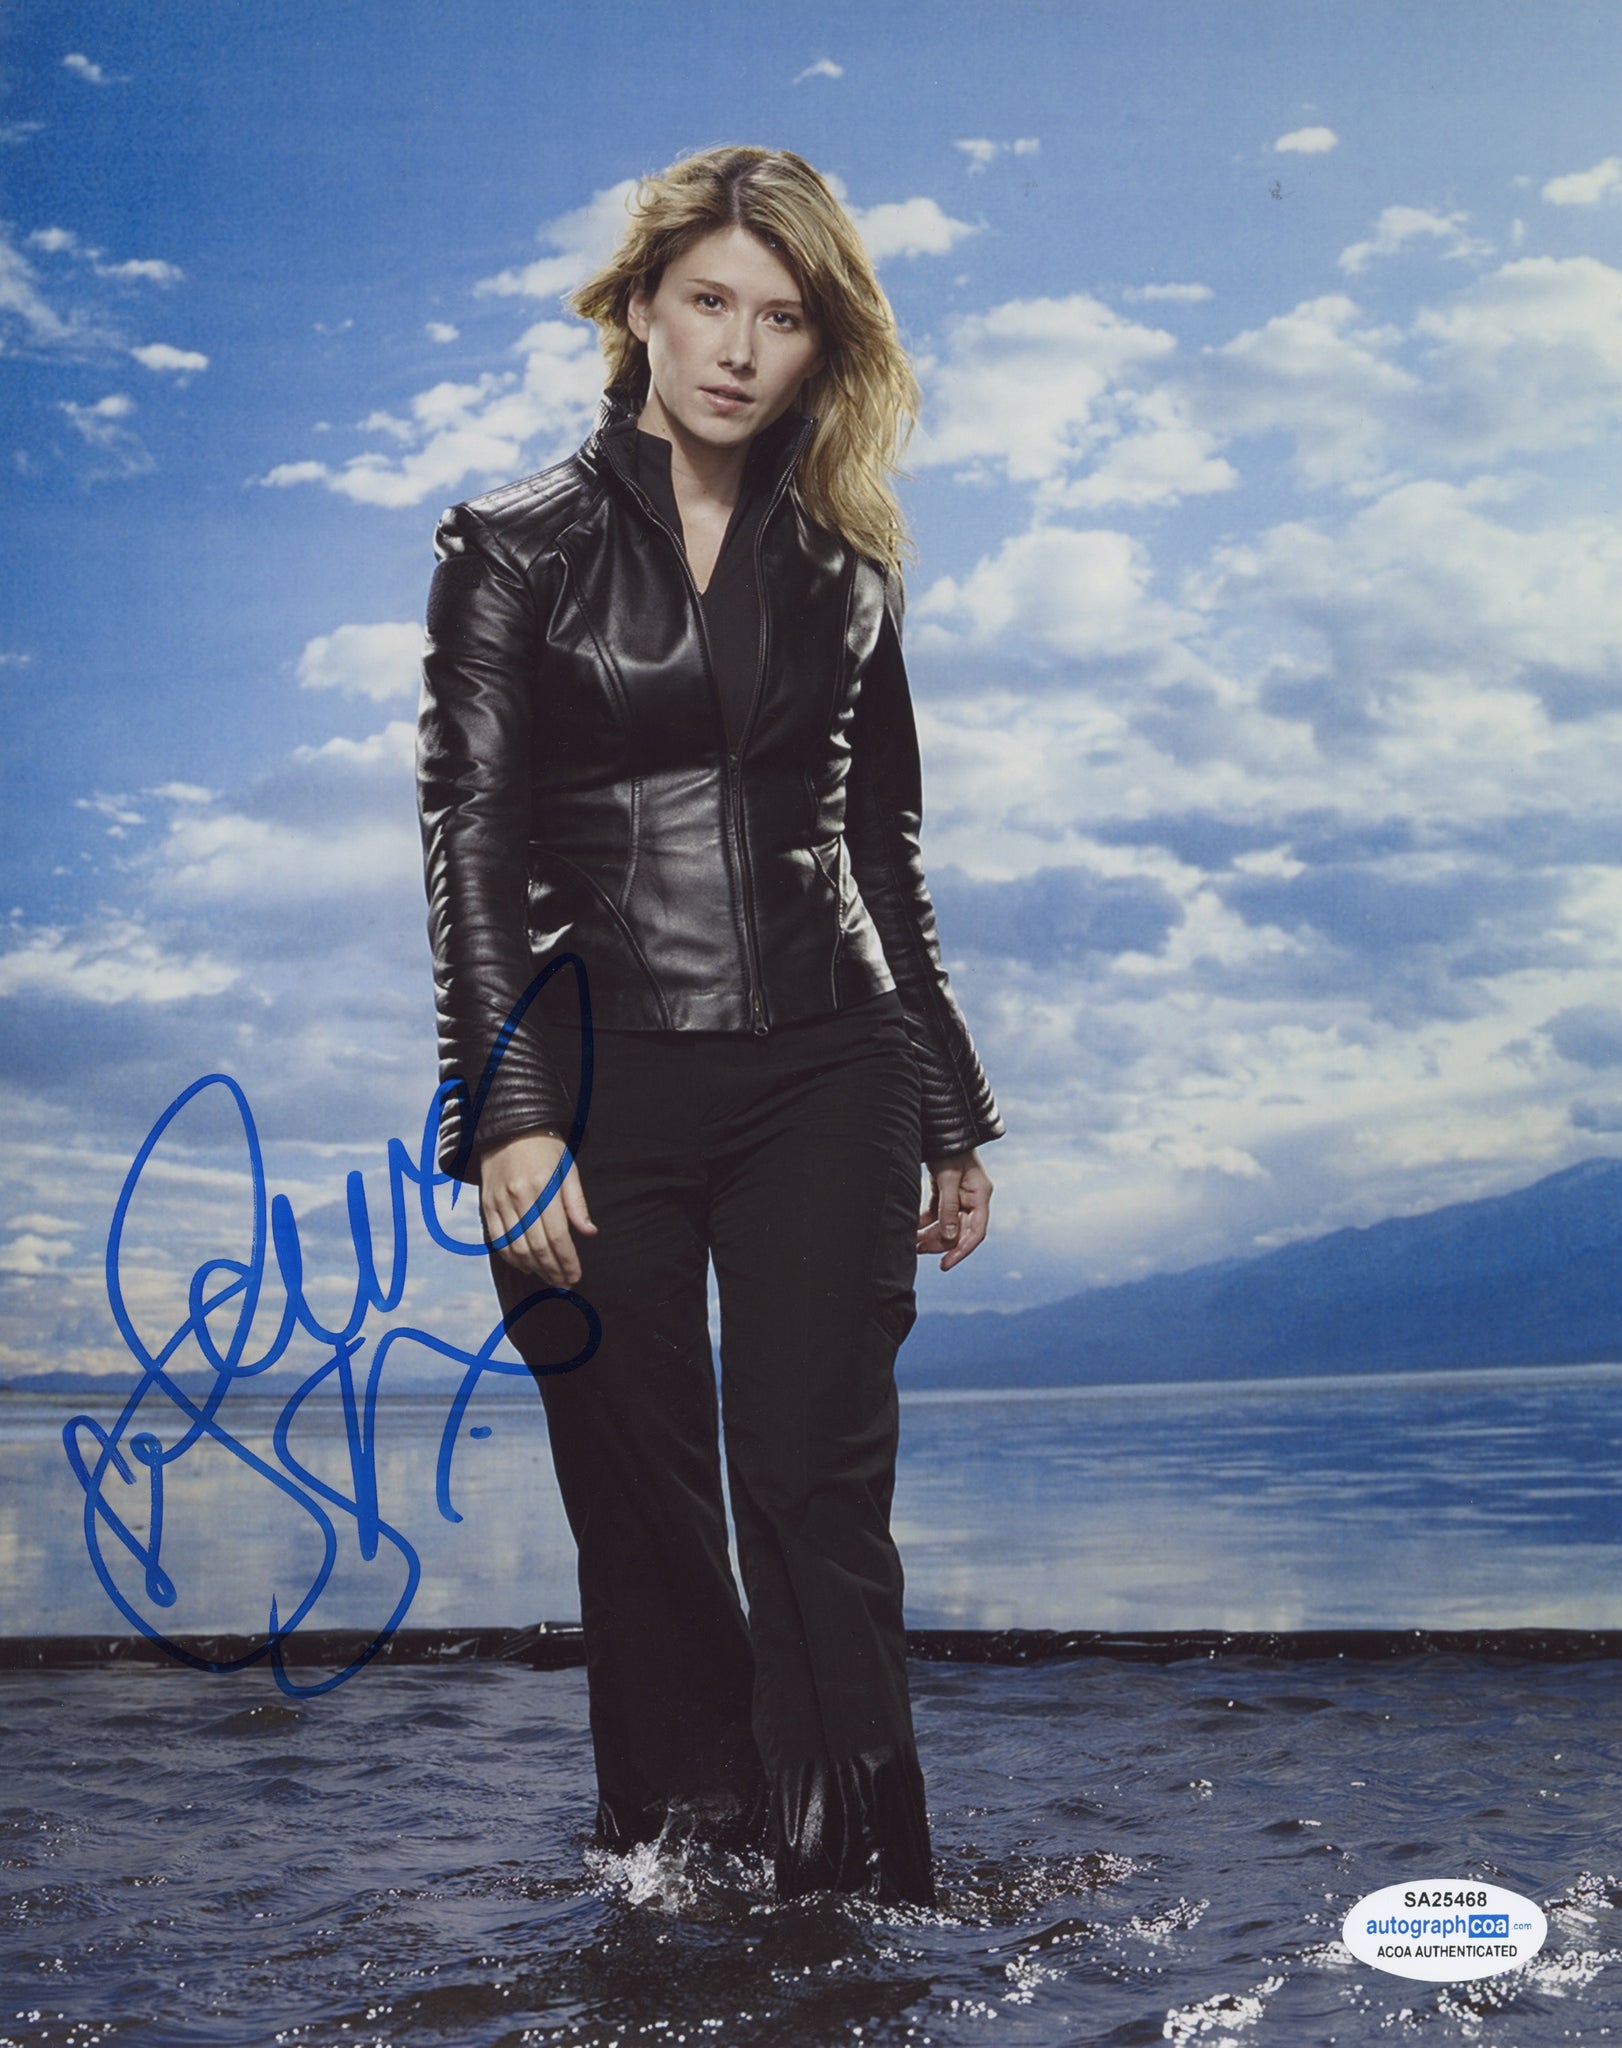 Jewel Staite Stargate Signed Autograph 8x10 Photo ACOA #2 - Outlaw Hobbies Authentic Autographs